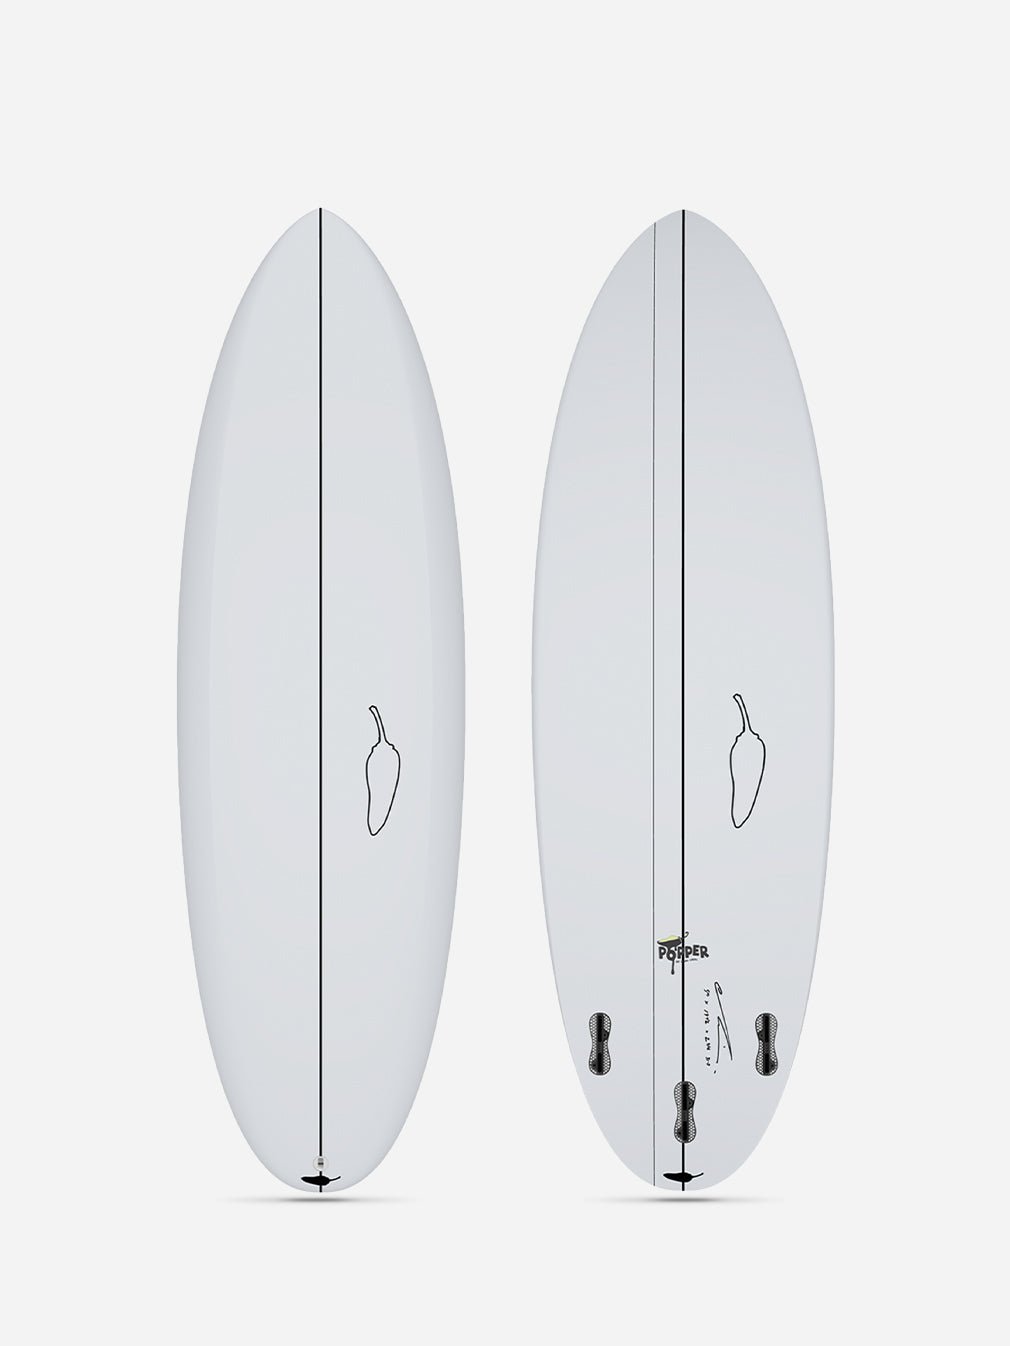 Popper Chilli Surfboard